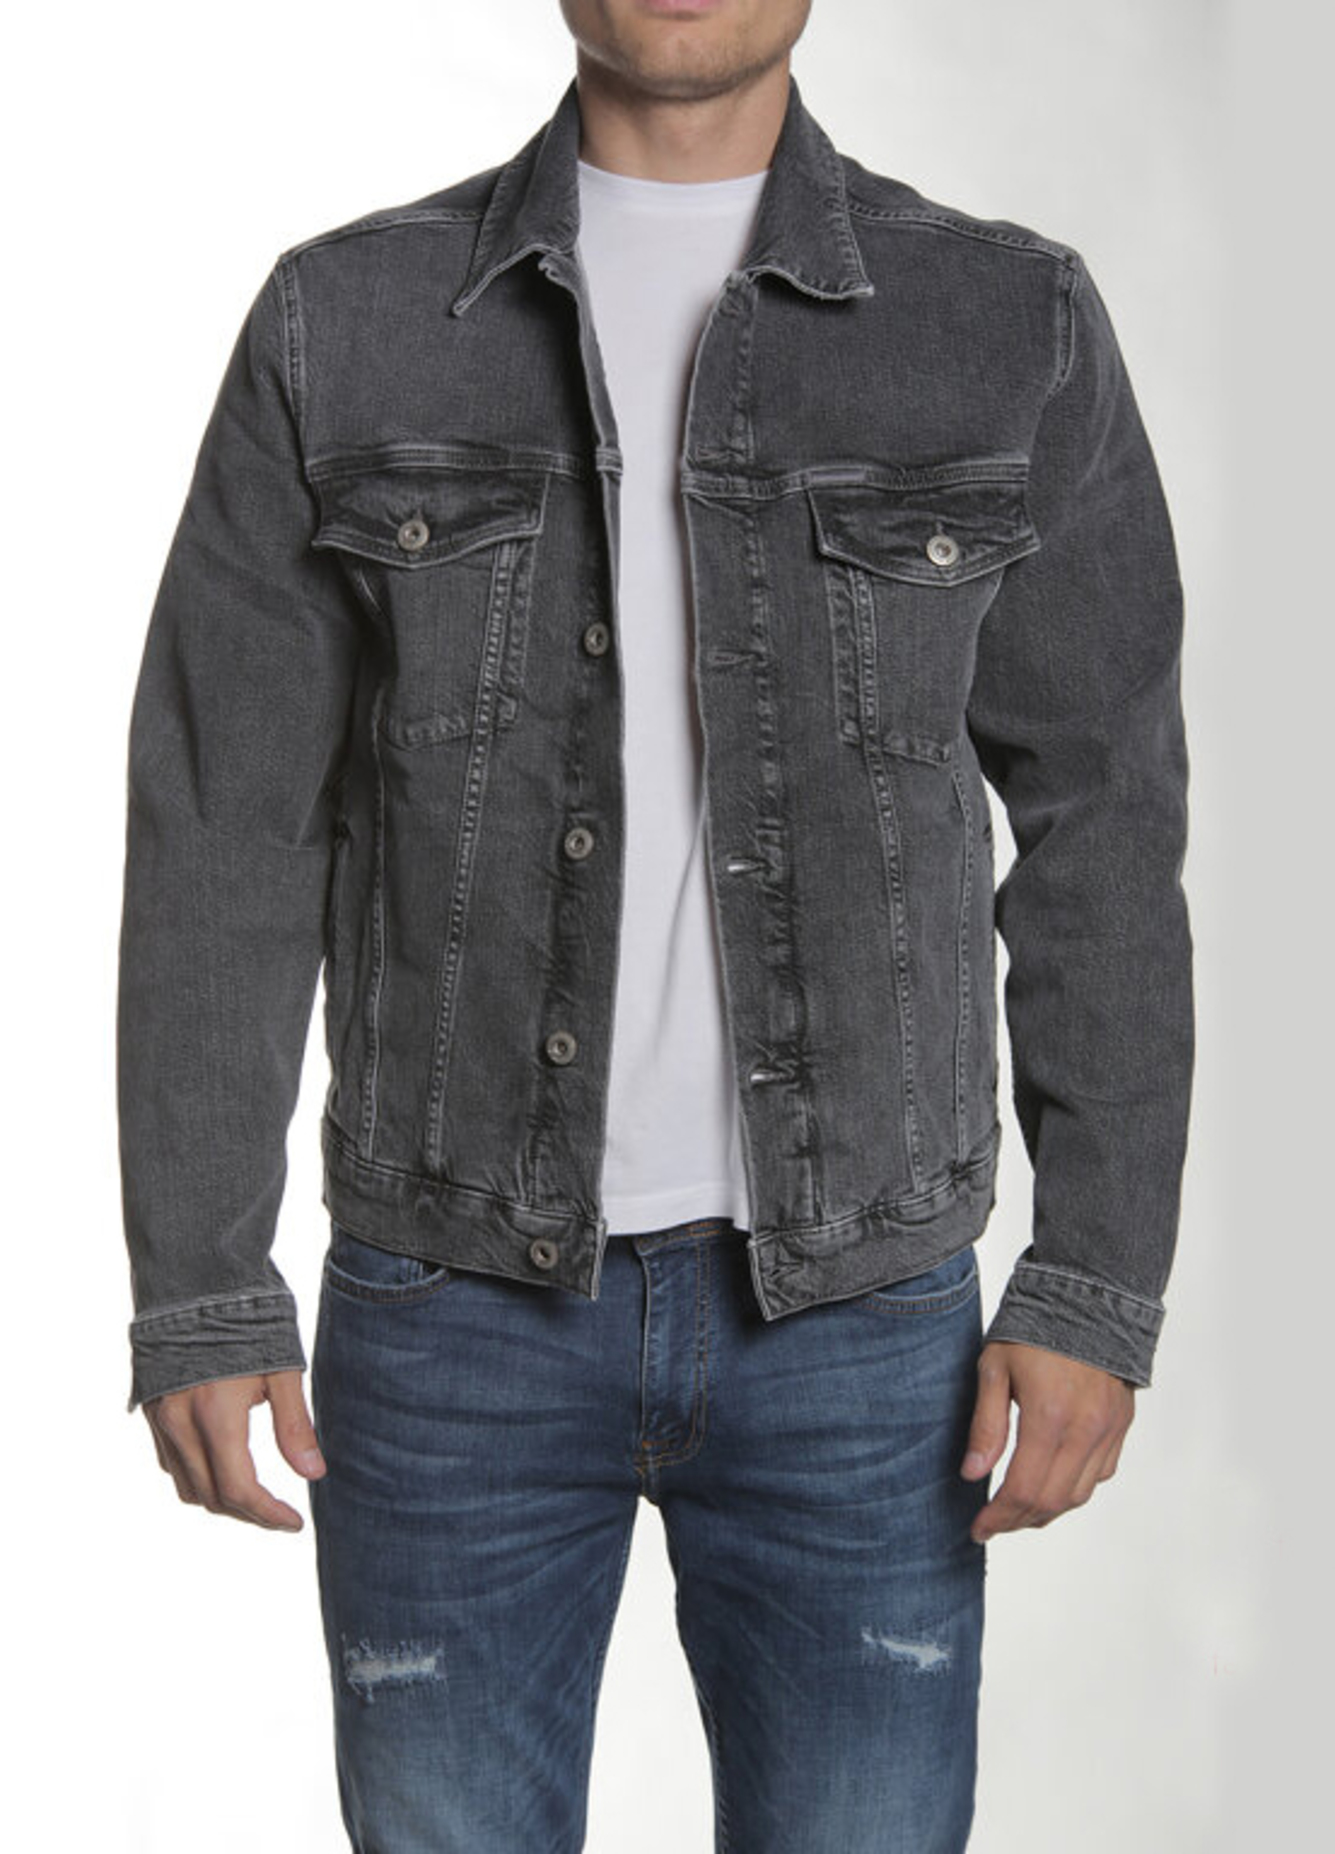 Cross Jeans Denim Jacket Grey 006 - A-320-006